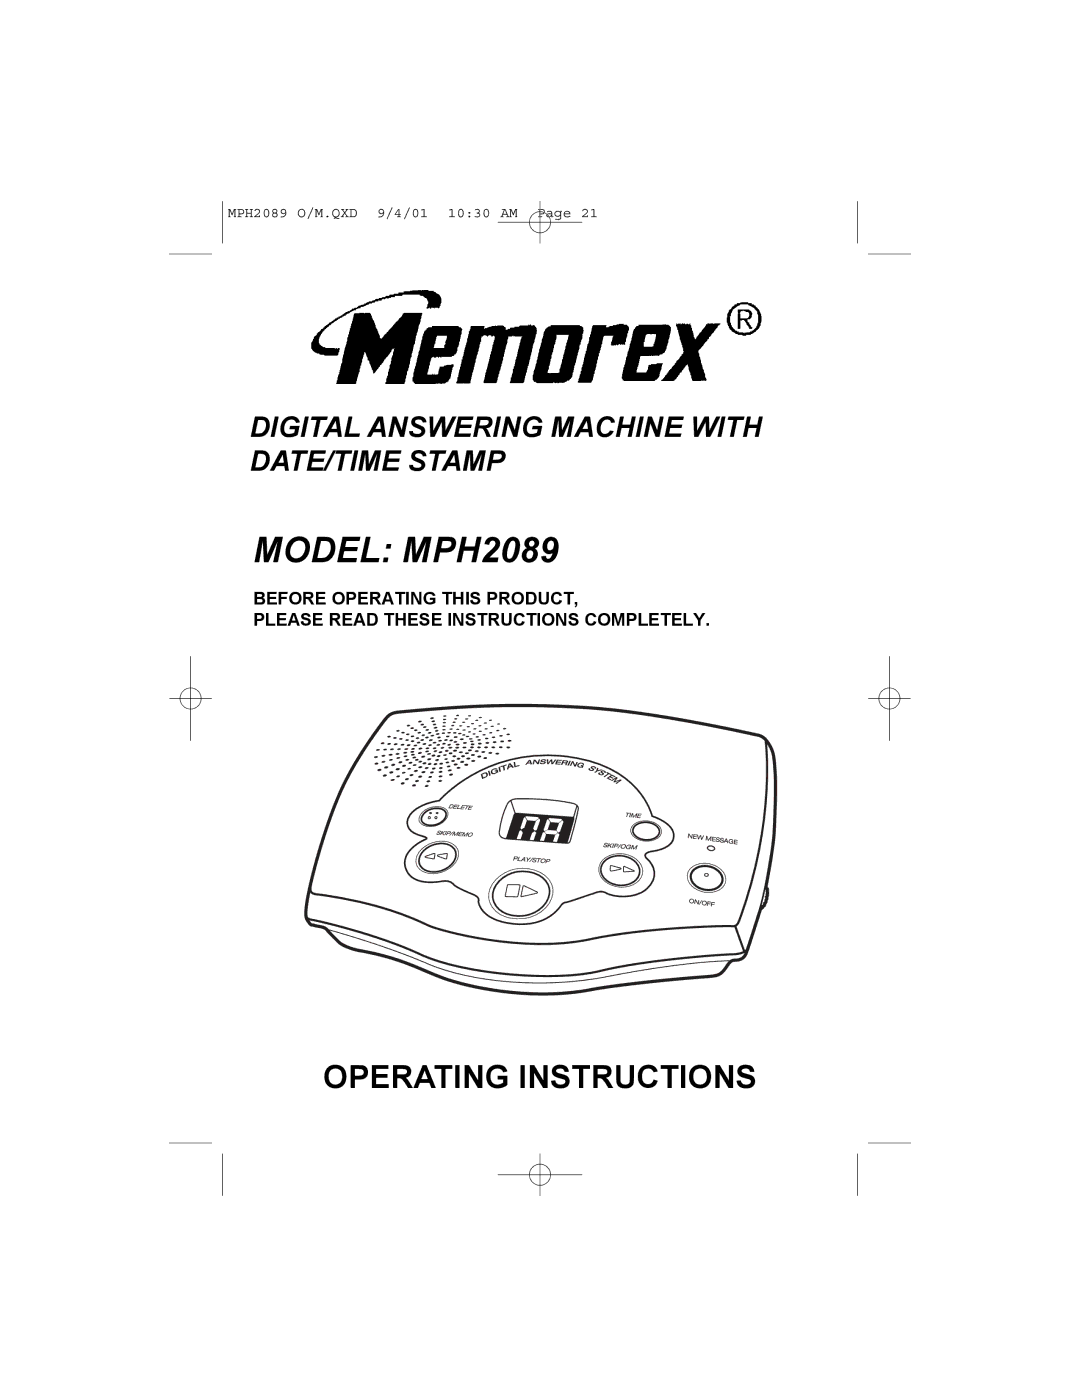 Memorex operating instructions Model MPH2089 